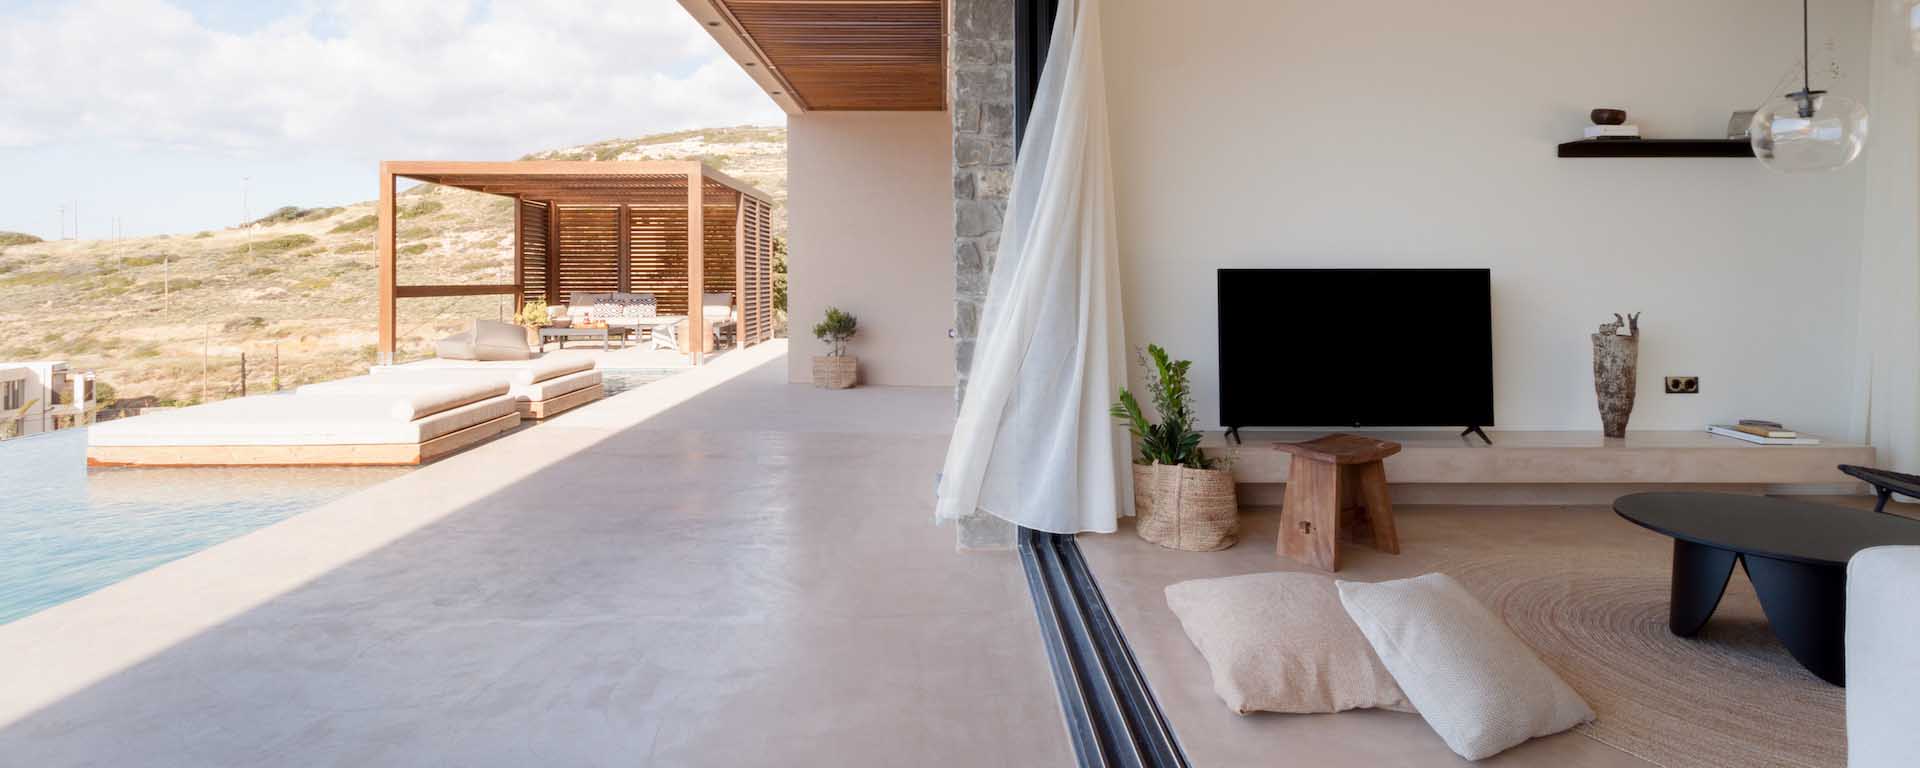 Urlaub im Luxus Ferienhaus auf Kreta - Villa Sitia